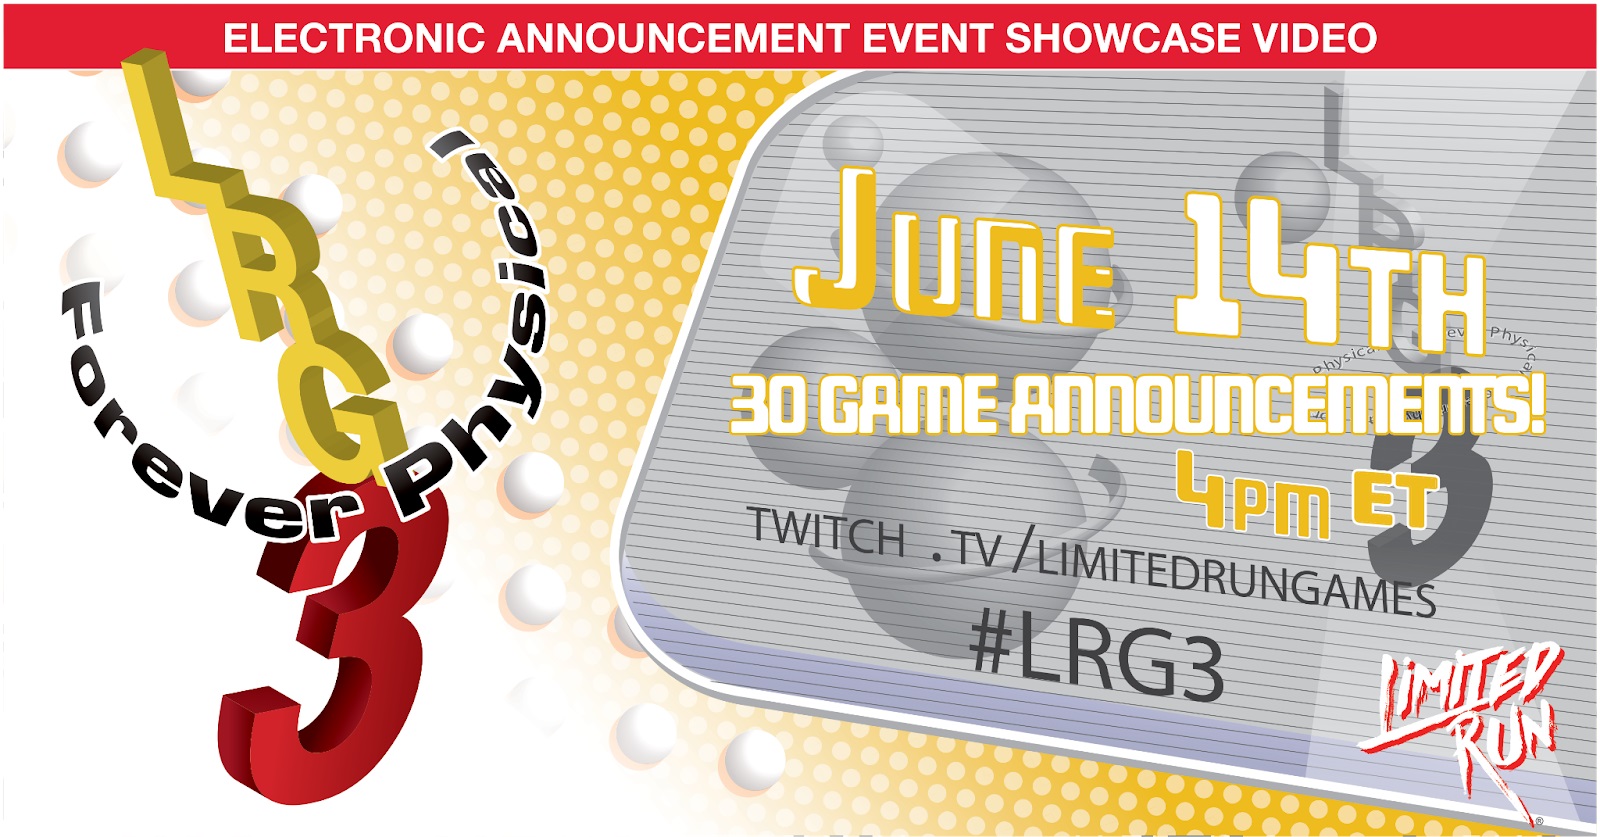 Limited Run Games E3 2021 06 14 21 1